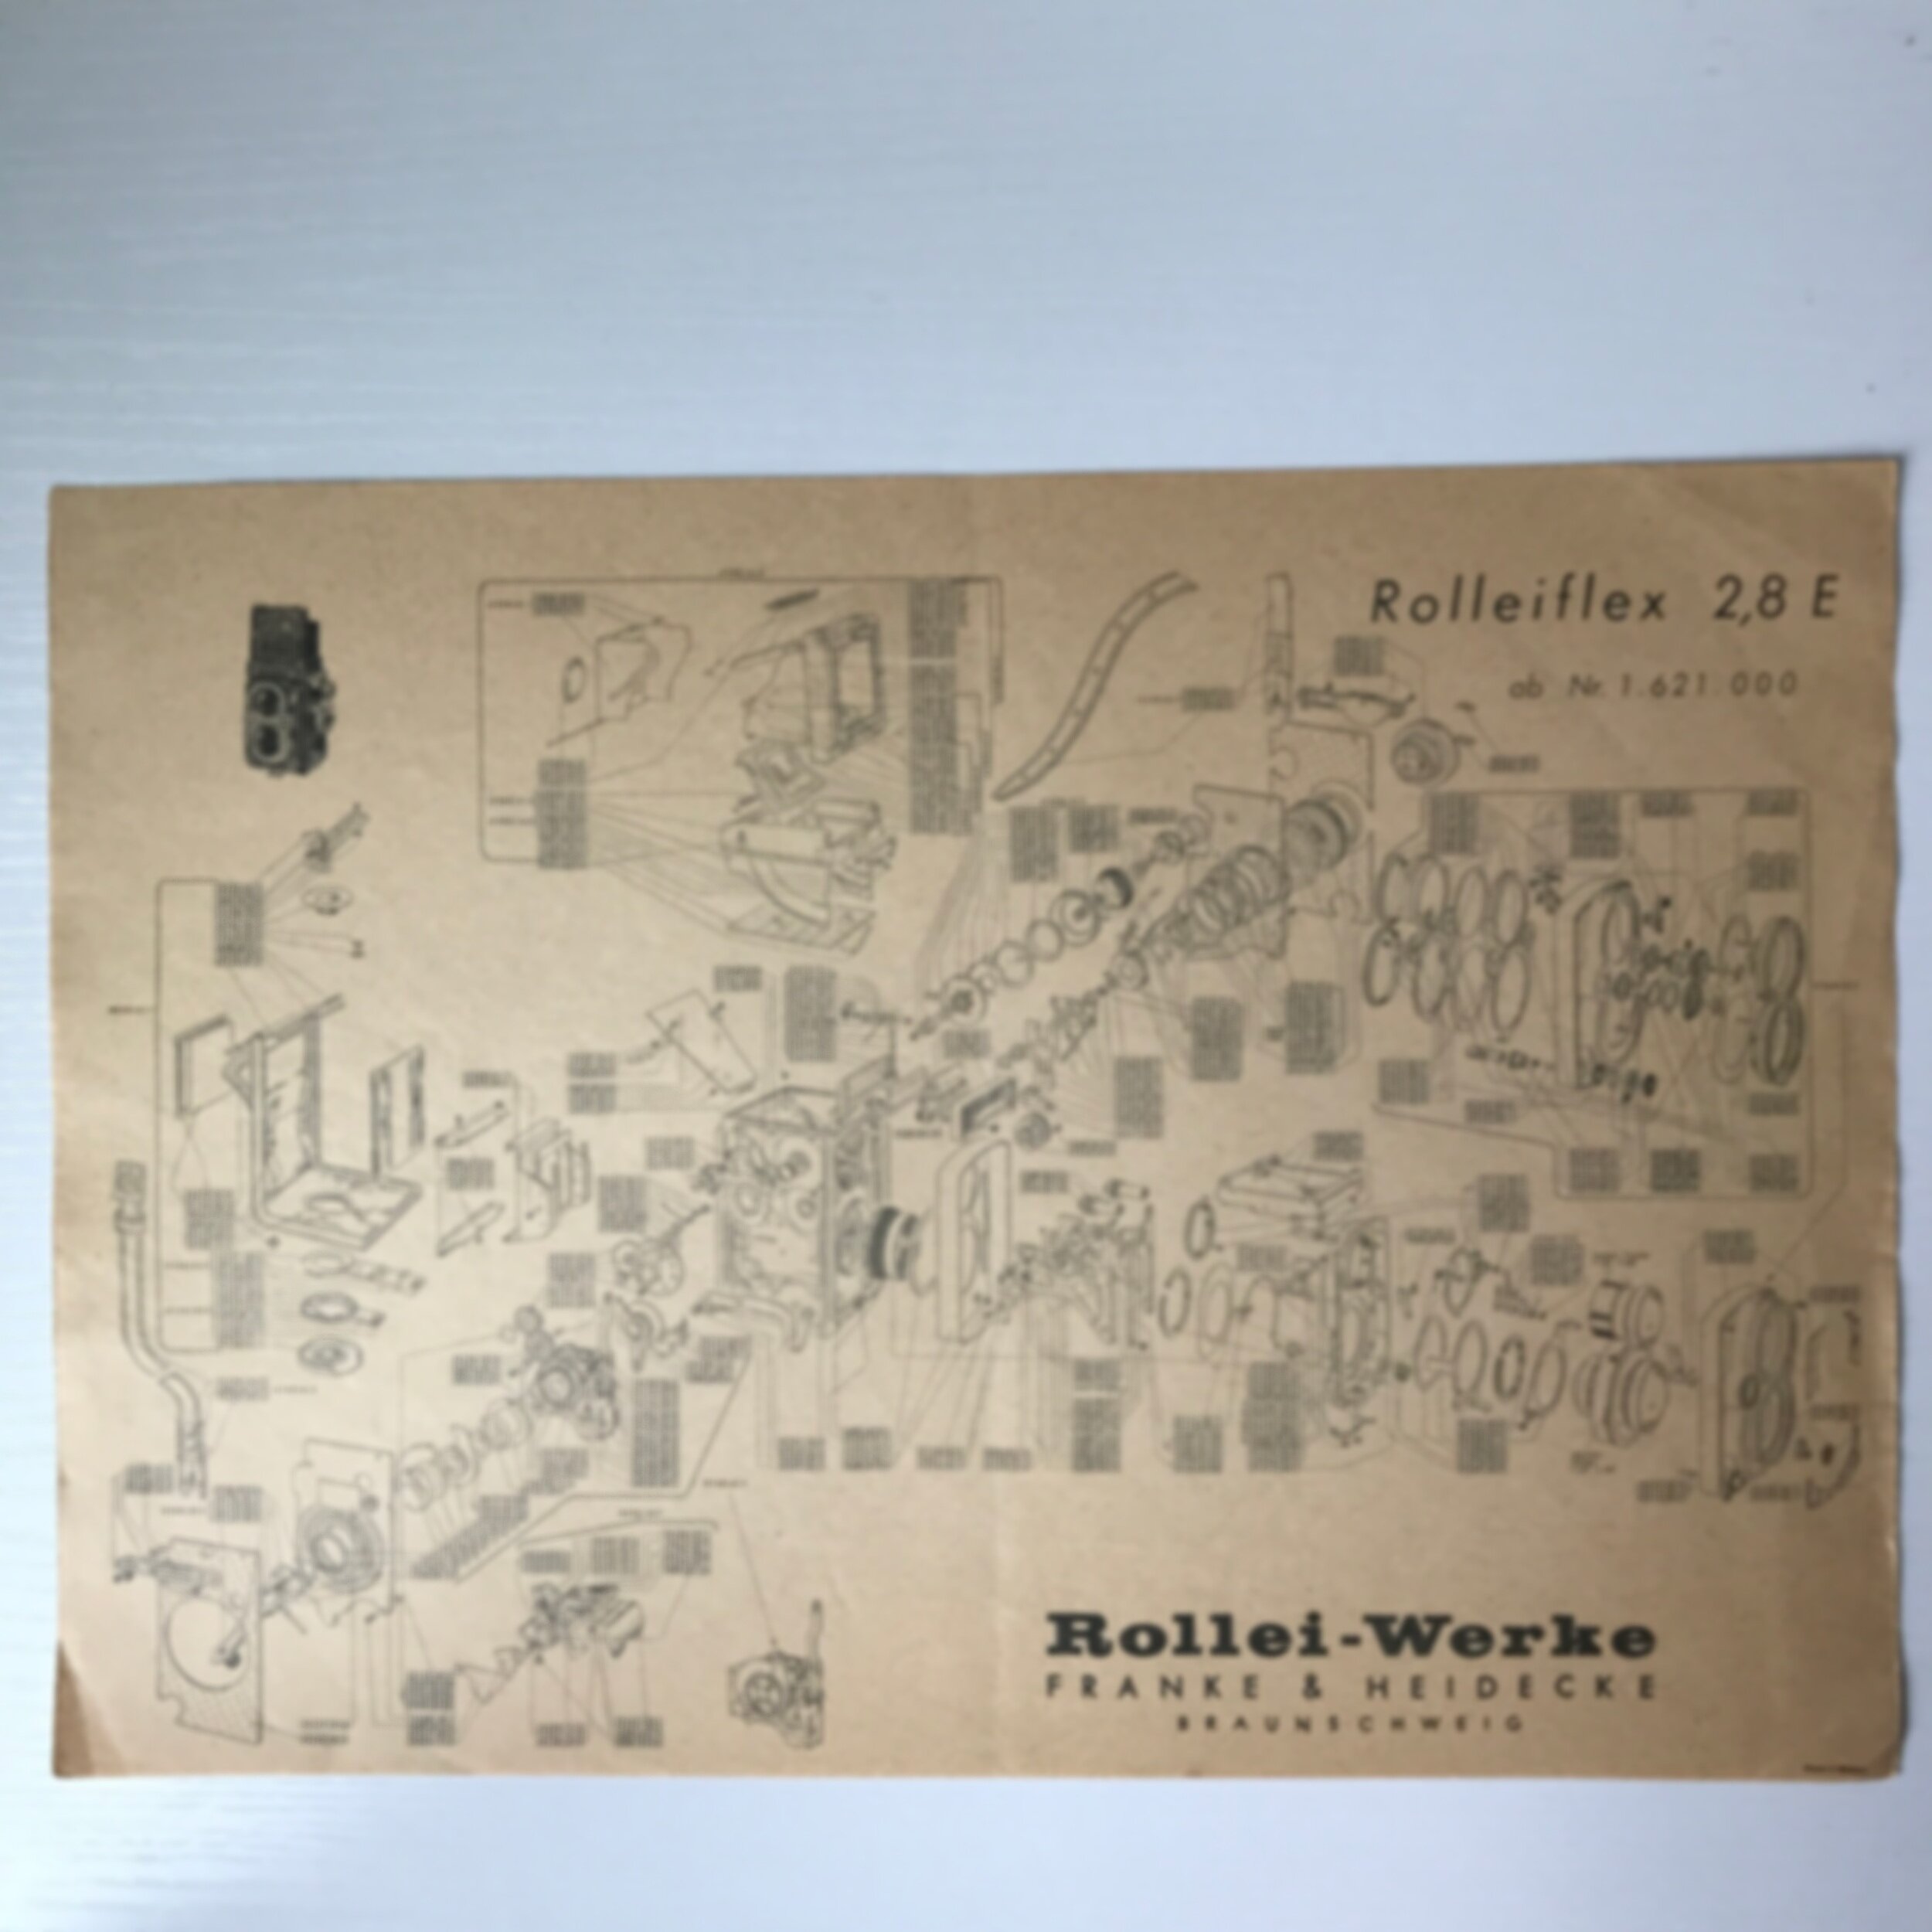 Exploded Diagram Schematic Rolleiflex 2.8 D TLR Franke & Heidecke OEM Poster 